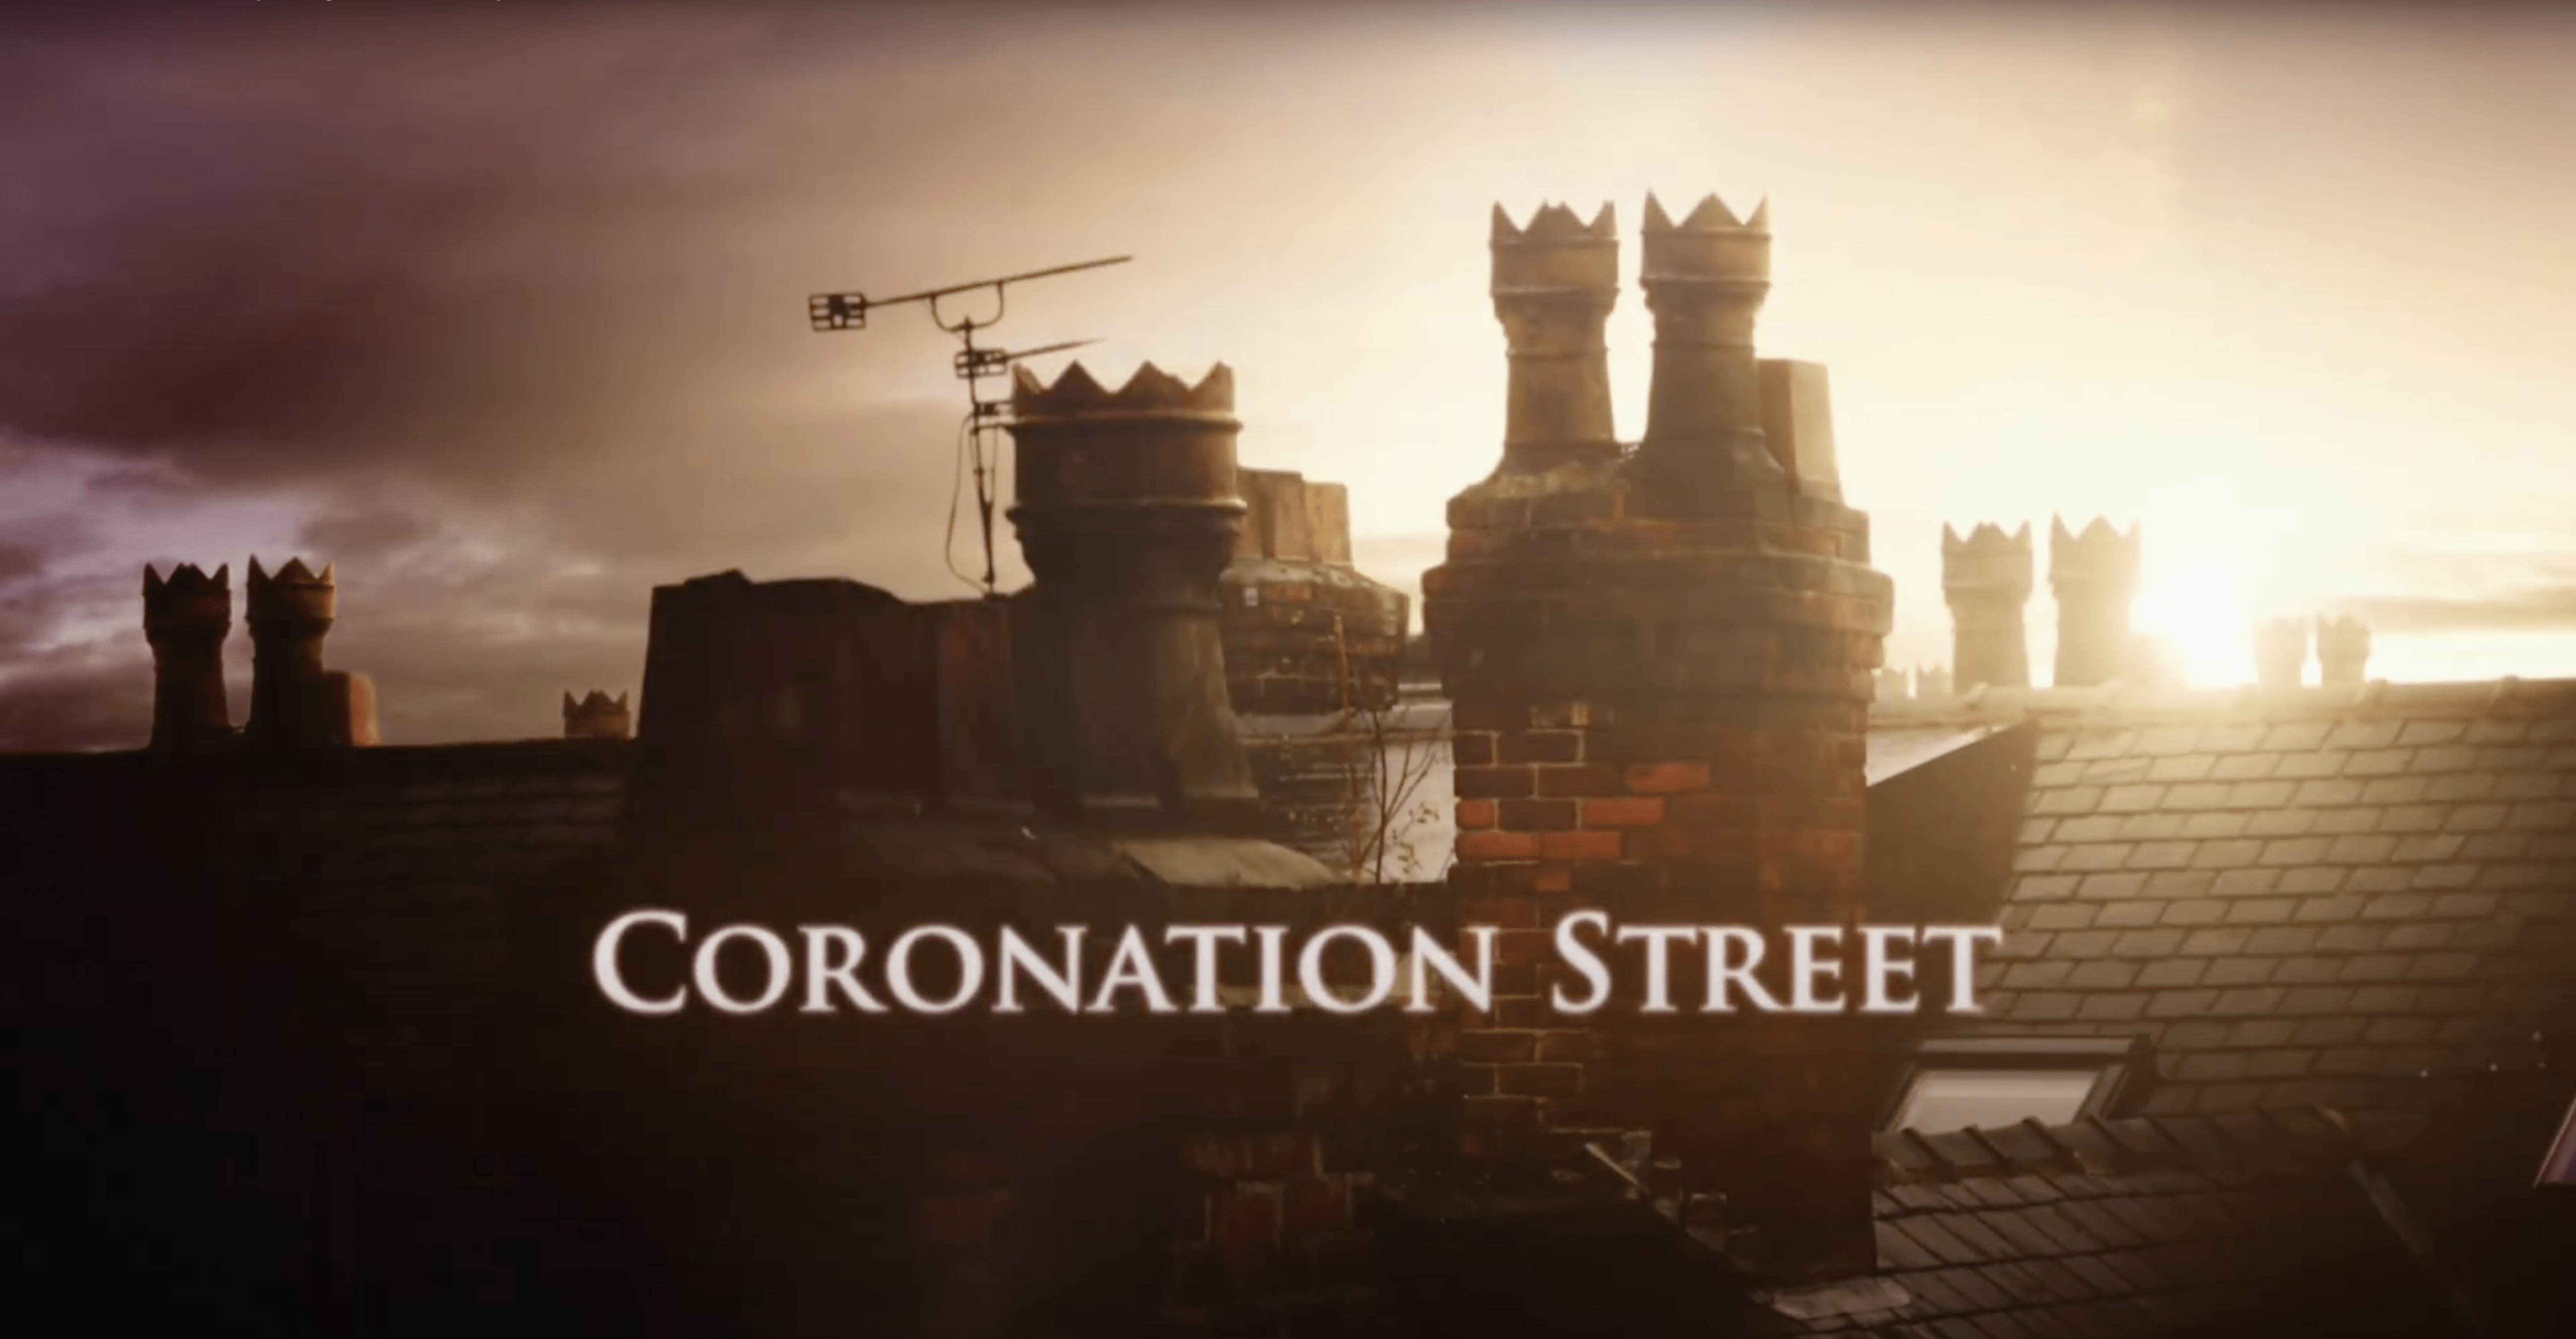 Coronation Street returns to filming after two week Covid-19 break